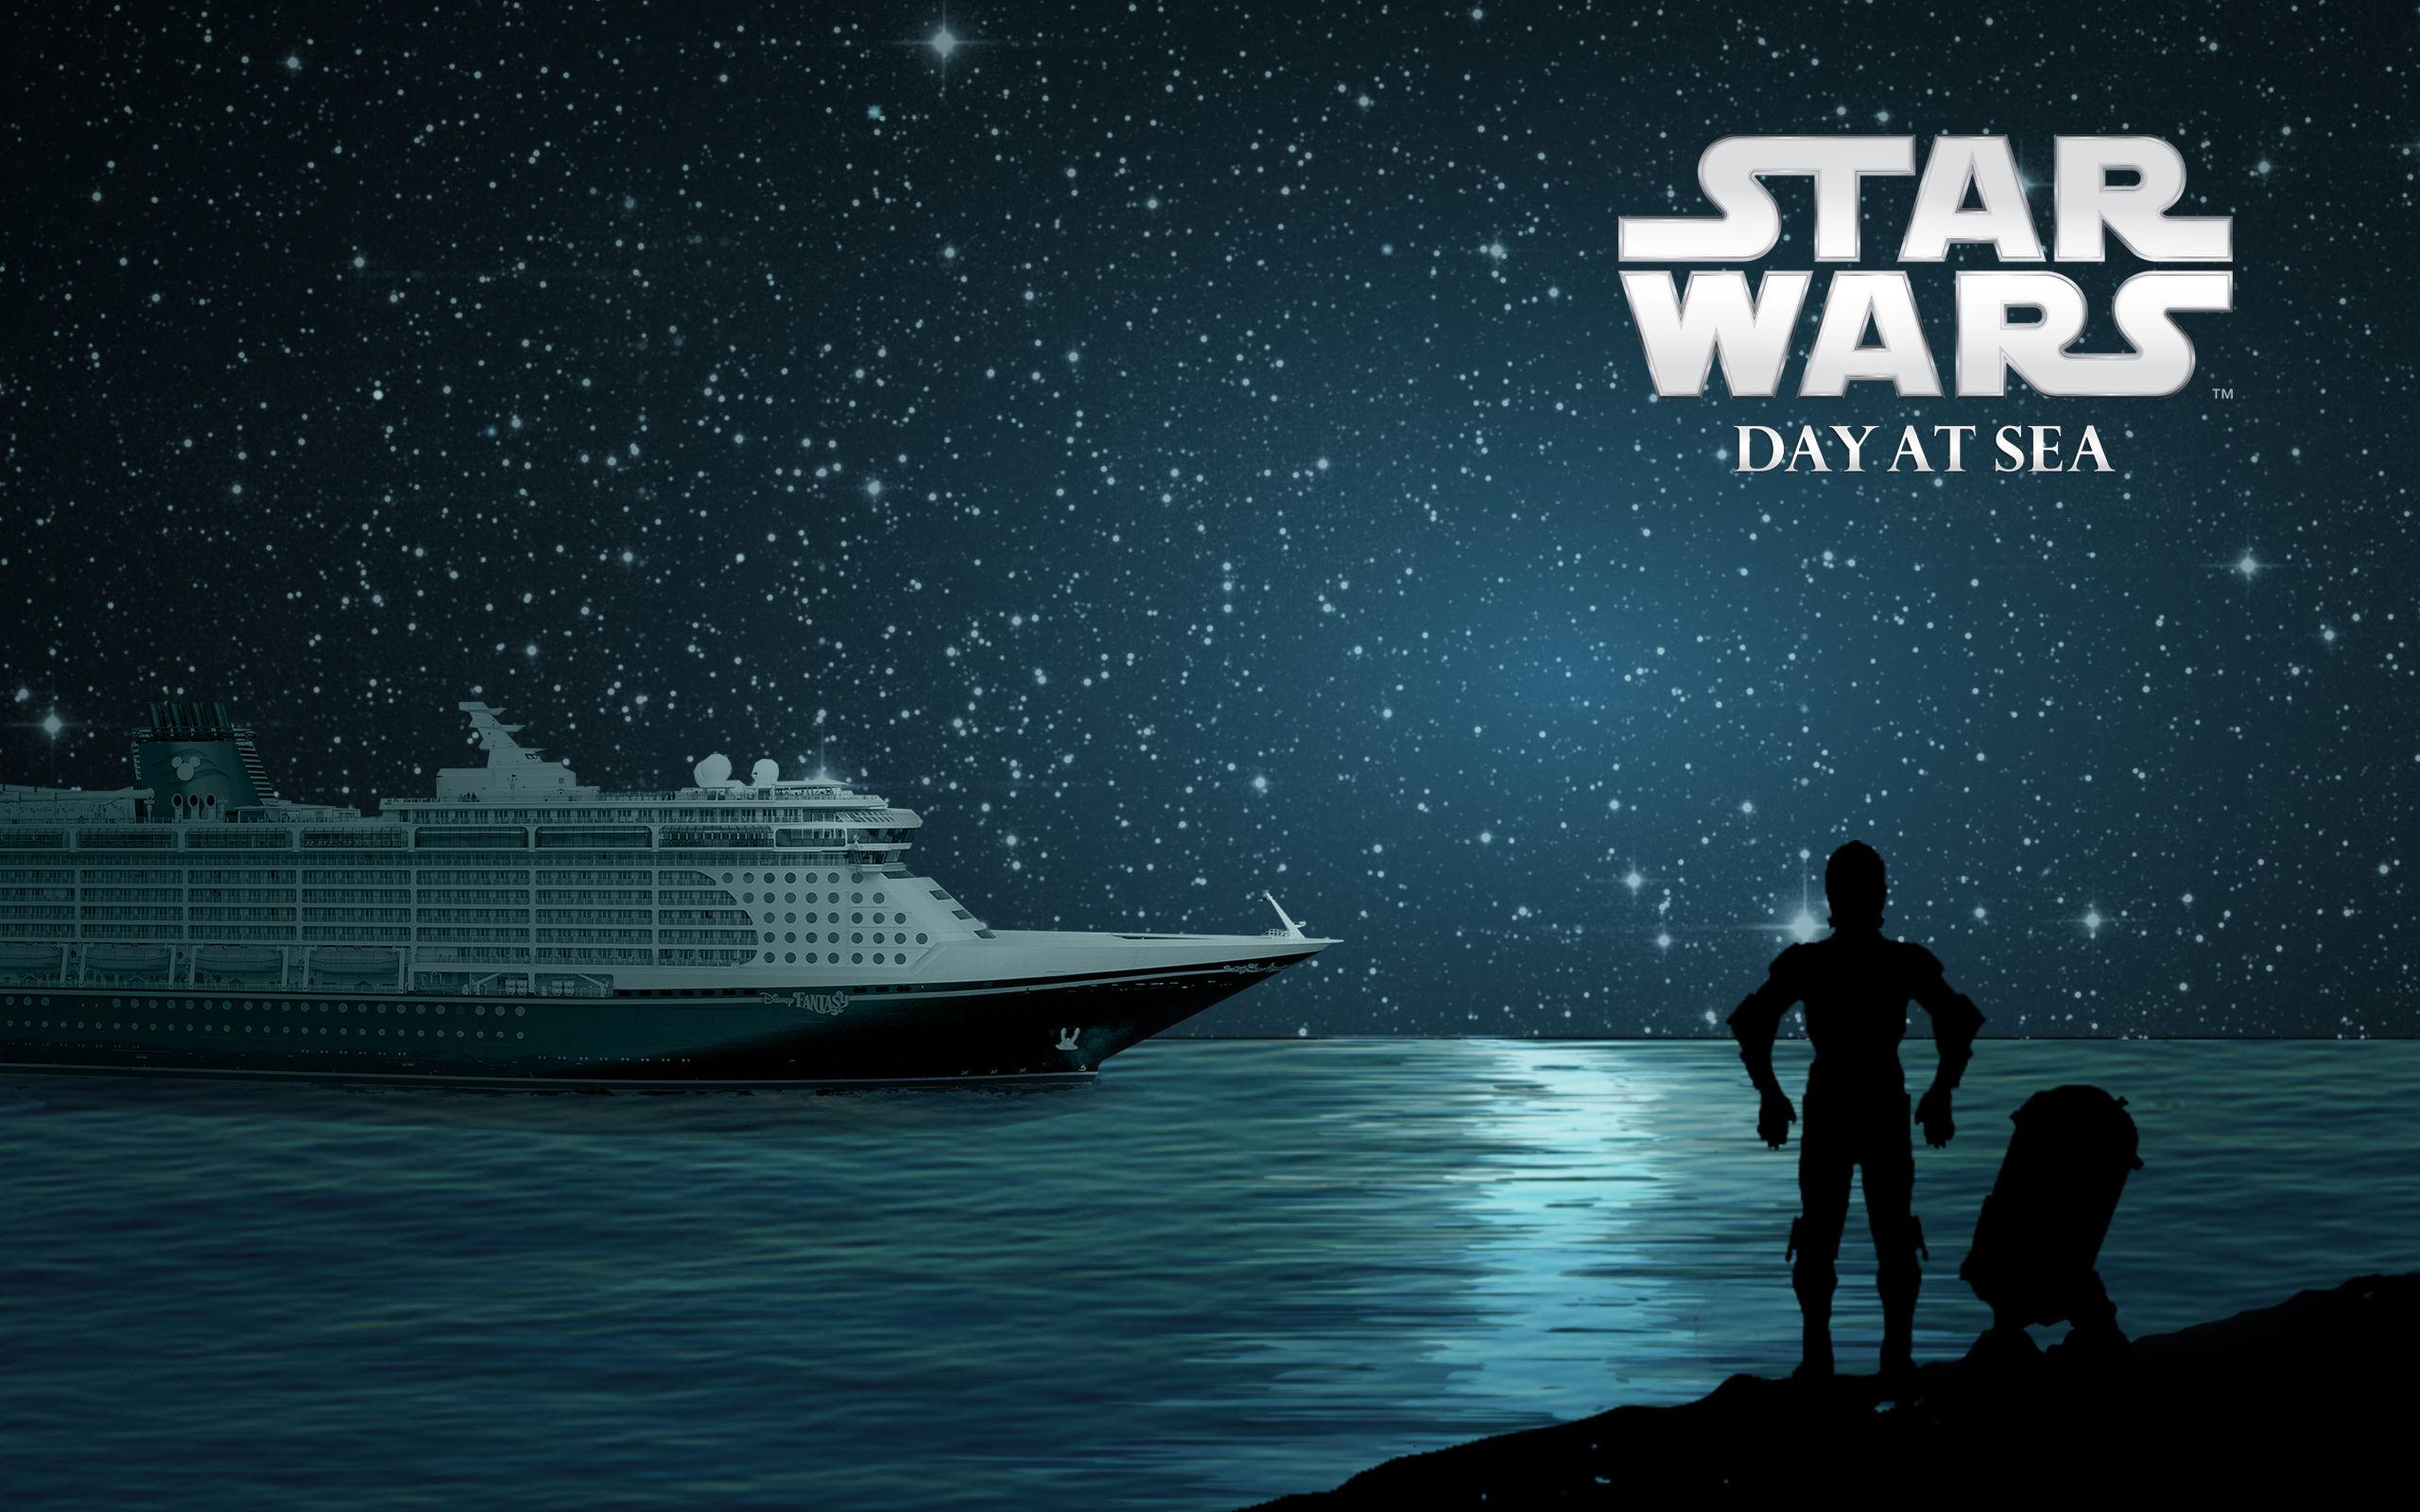 Star Wars Day at Sea Digital Wallpaper • The Disney Cruise Line Blog